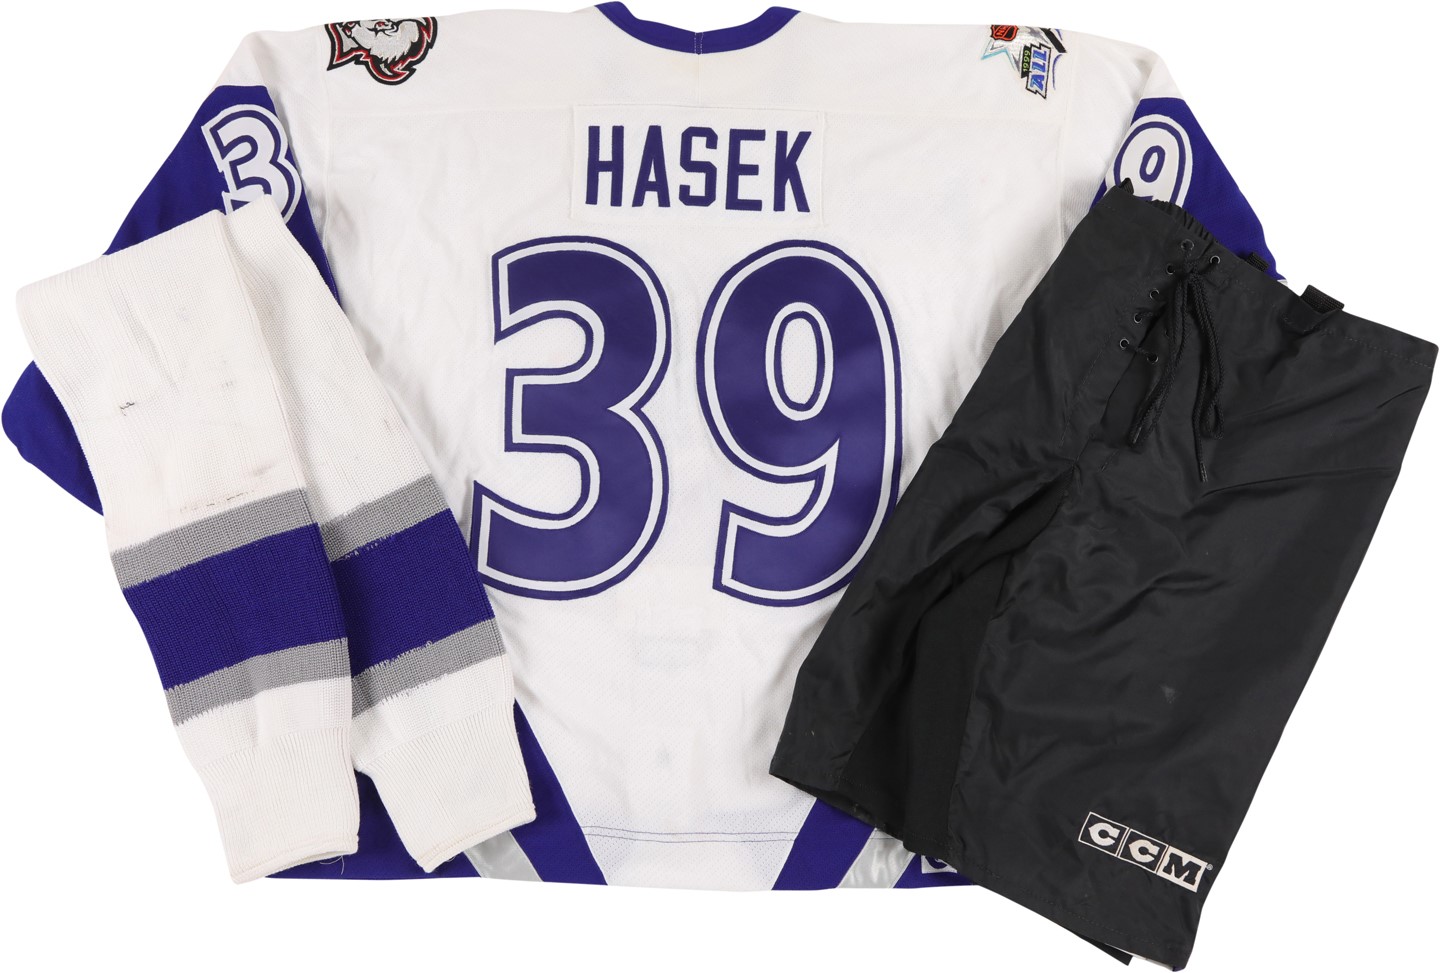 - 1999 Dominik Hasek NHL All-Star Game Worn Jersey, Pants and Socks